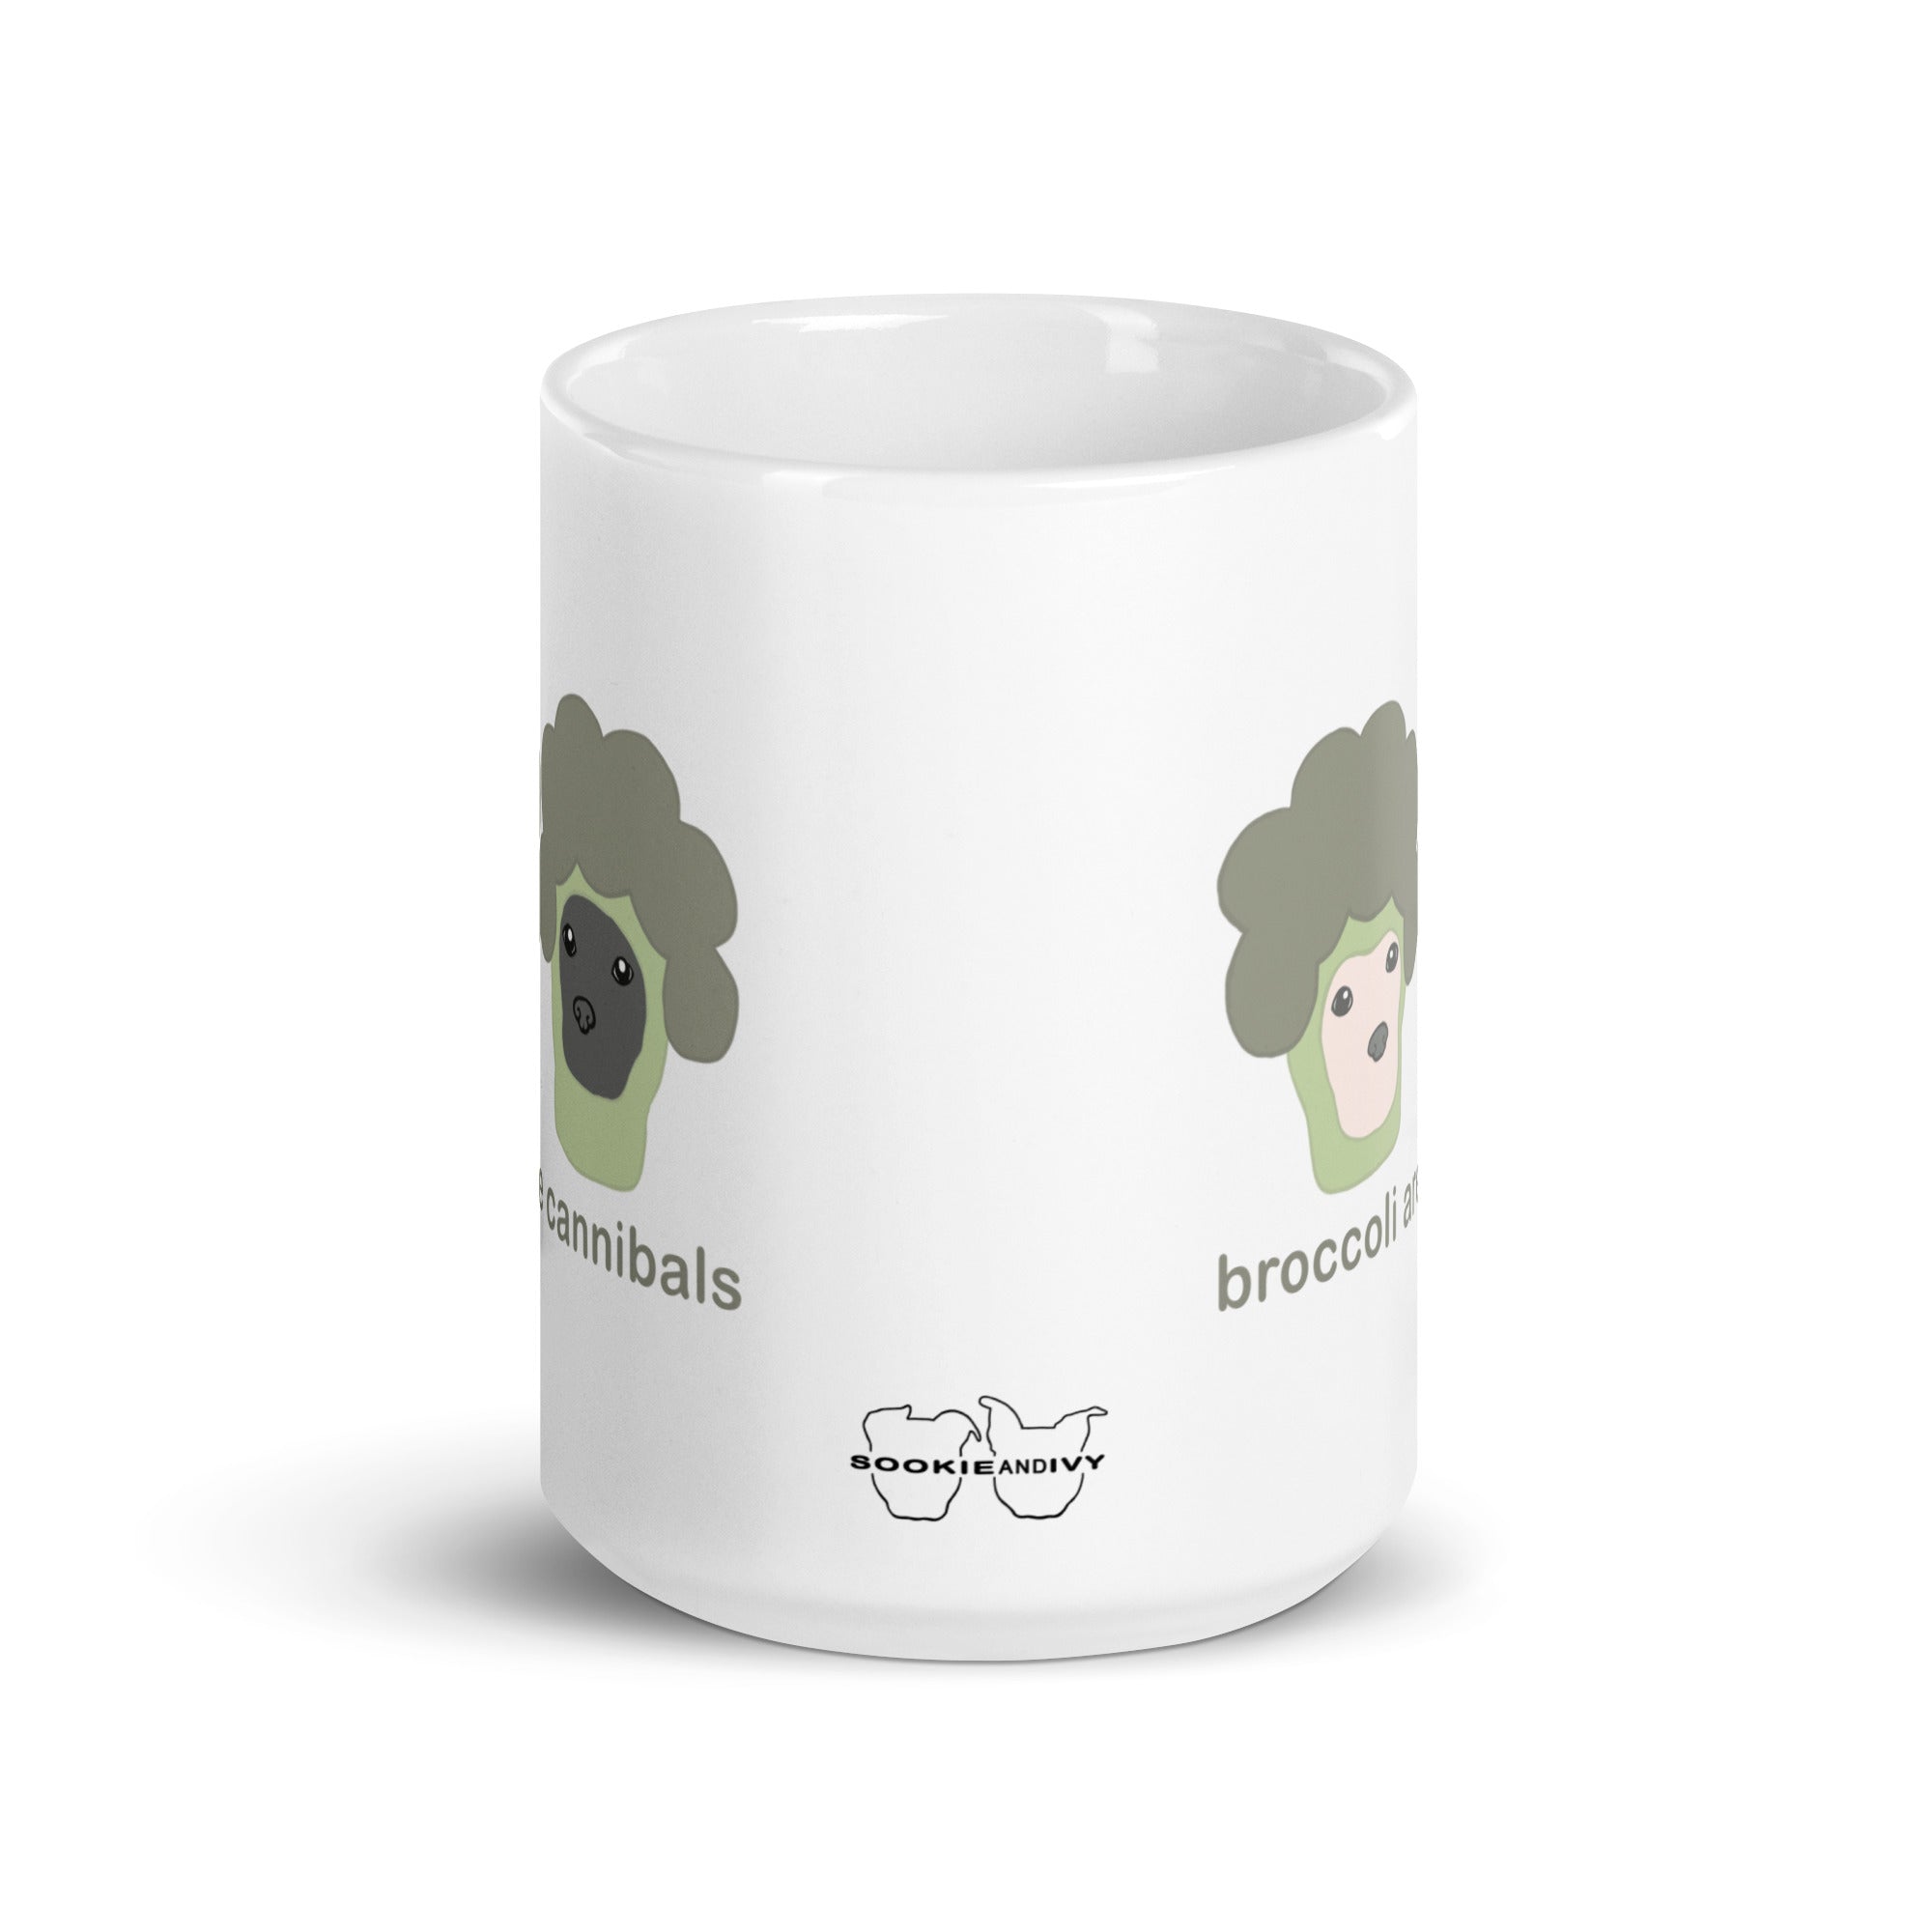 "Broccoli Are Cannibals" White glossy mug